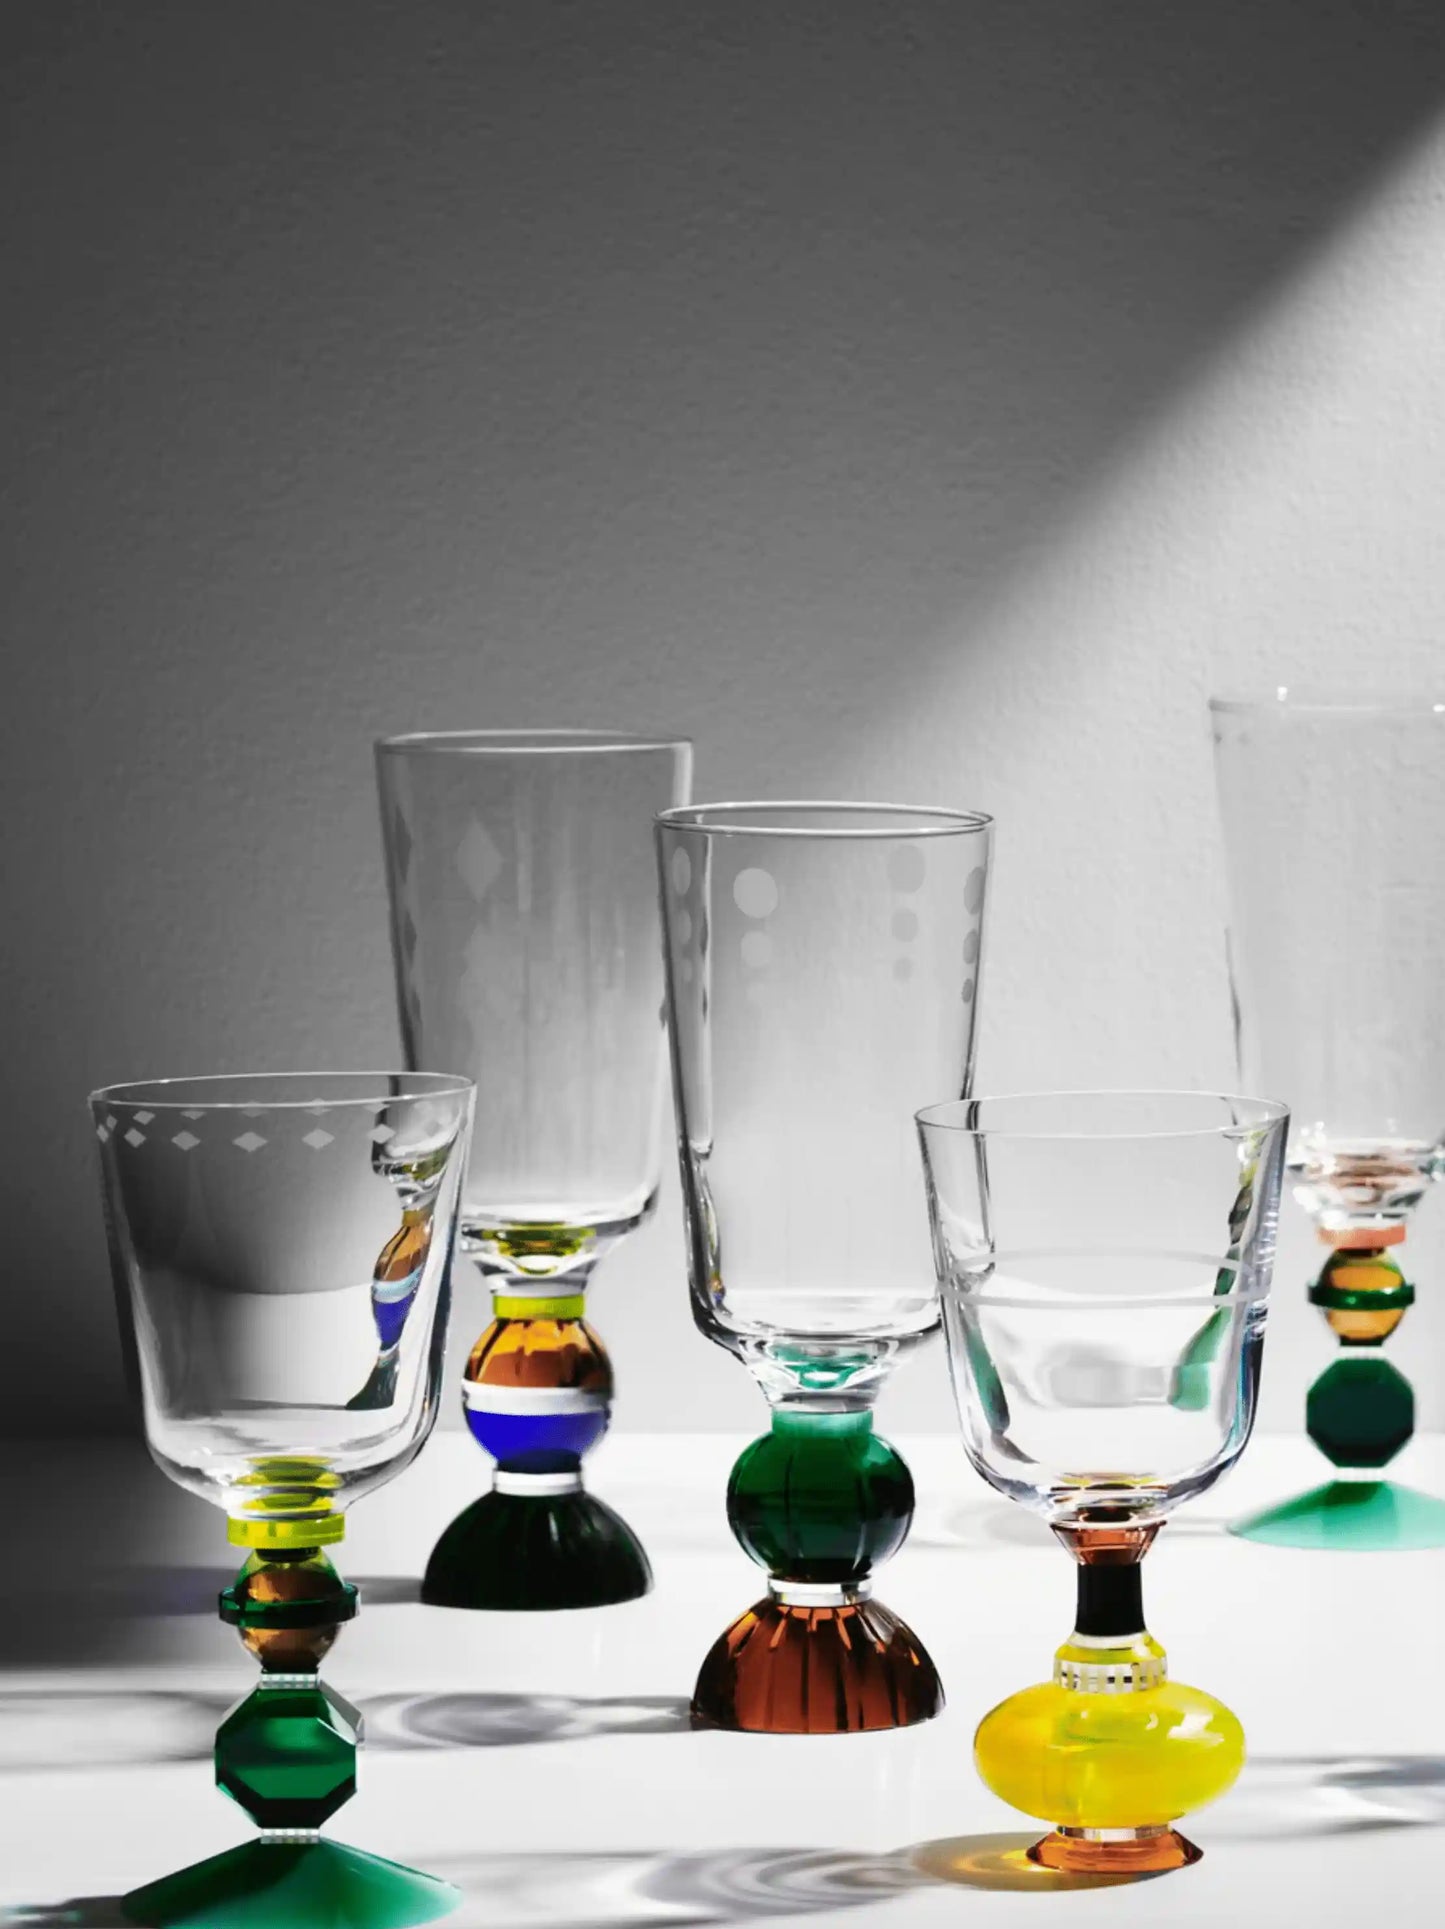 Ascot Tall Crystal Glass Set